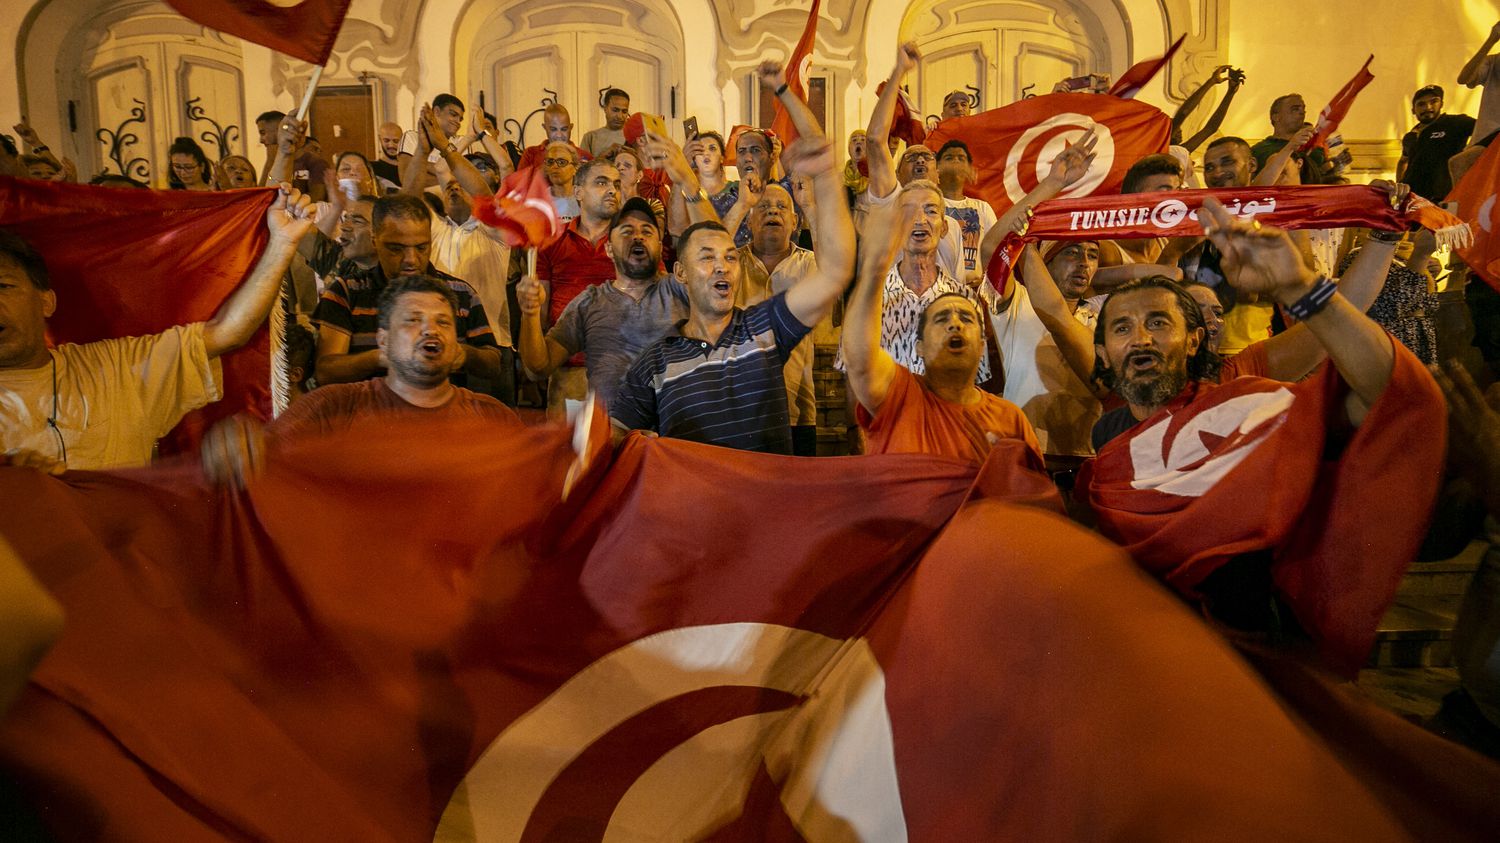 Tunisia: the 